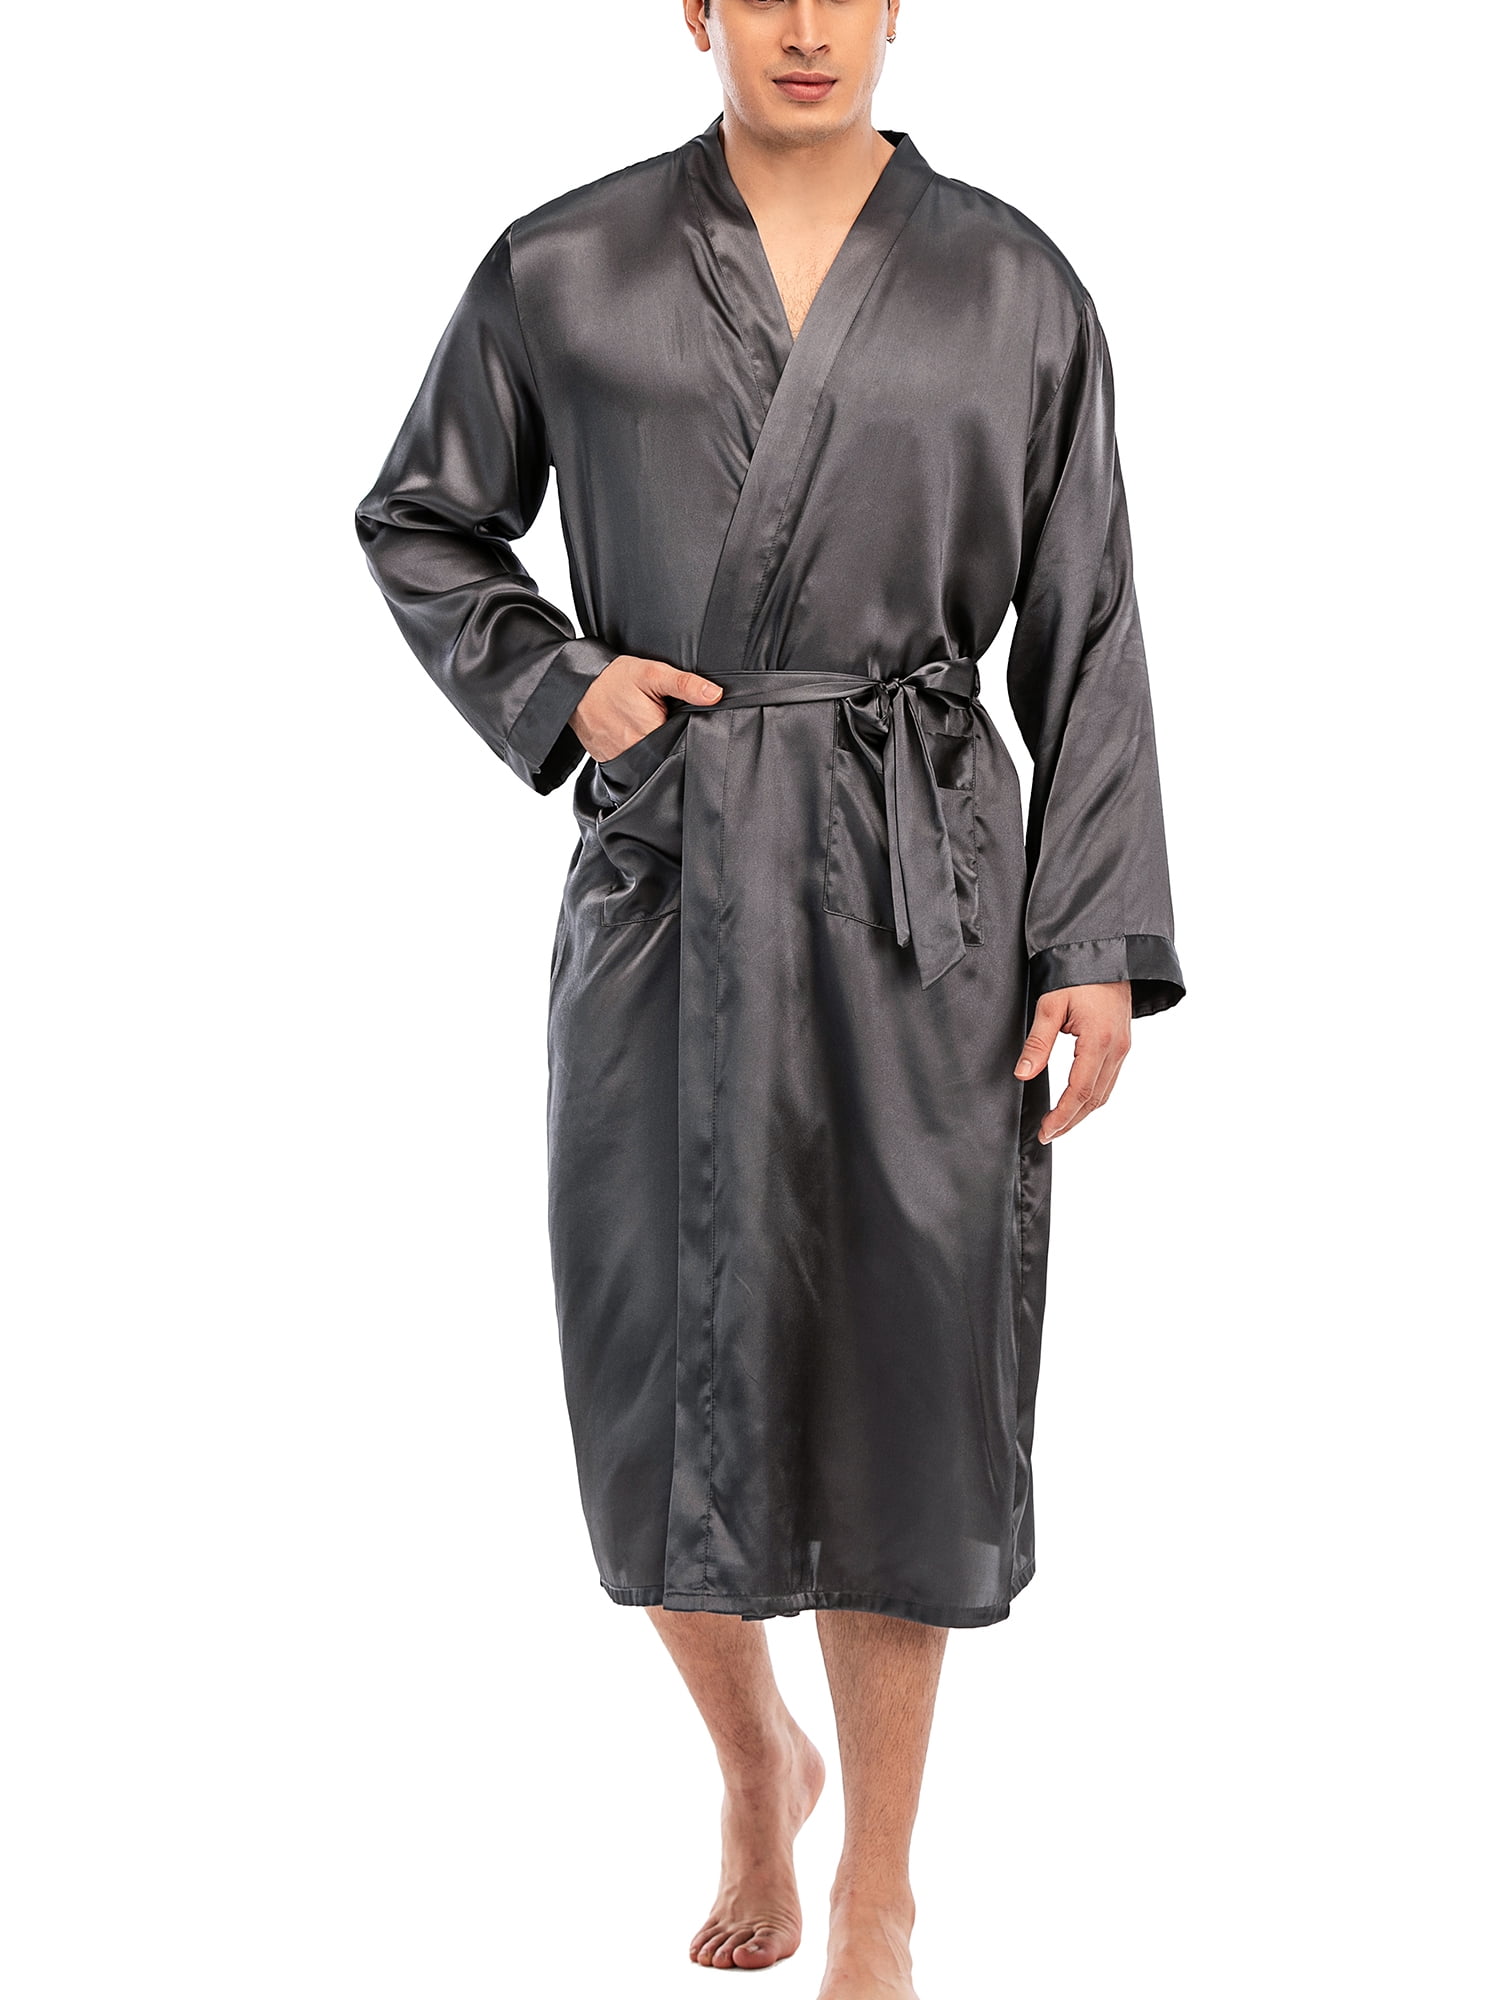 Alion Mens Shawl Collar Premium Satin Robe Sleepwear